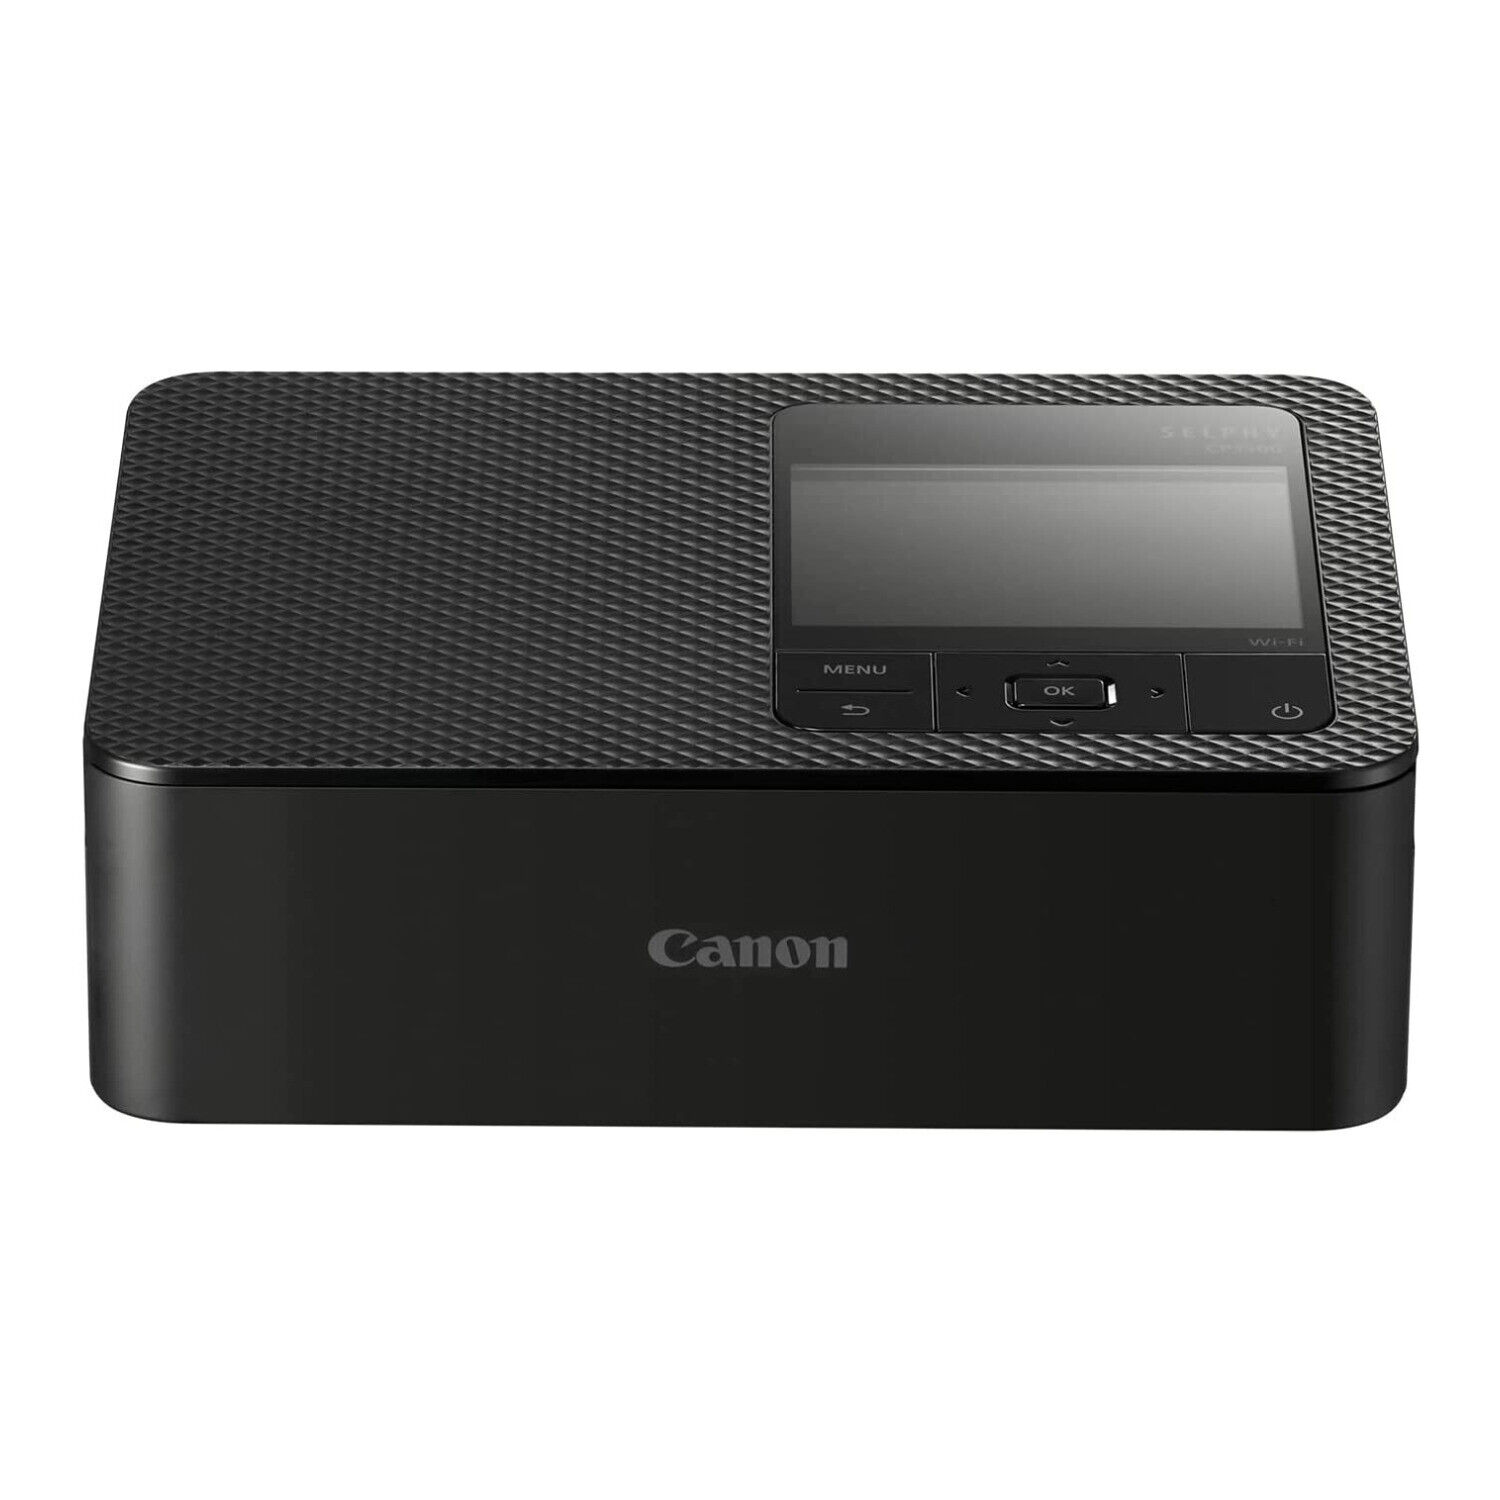 Canon Selphy CP1500 Wireless Compact Photo Printer Black